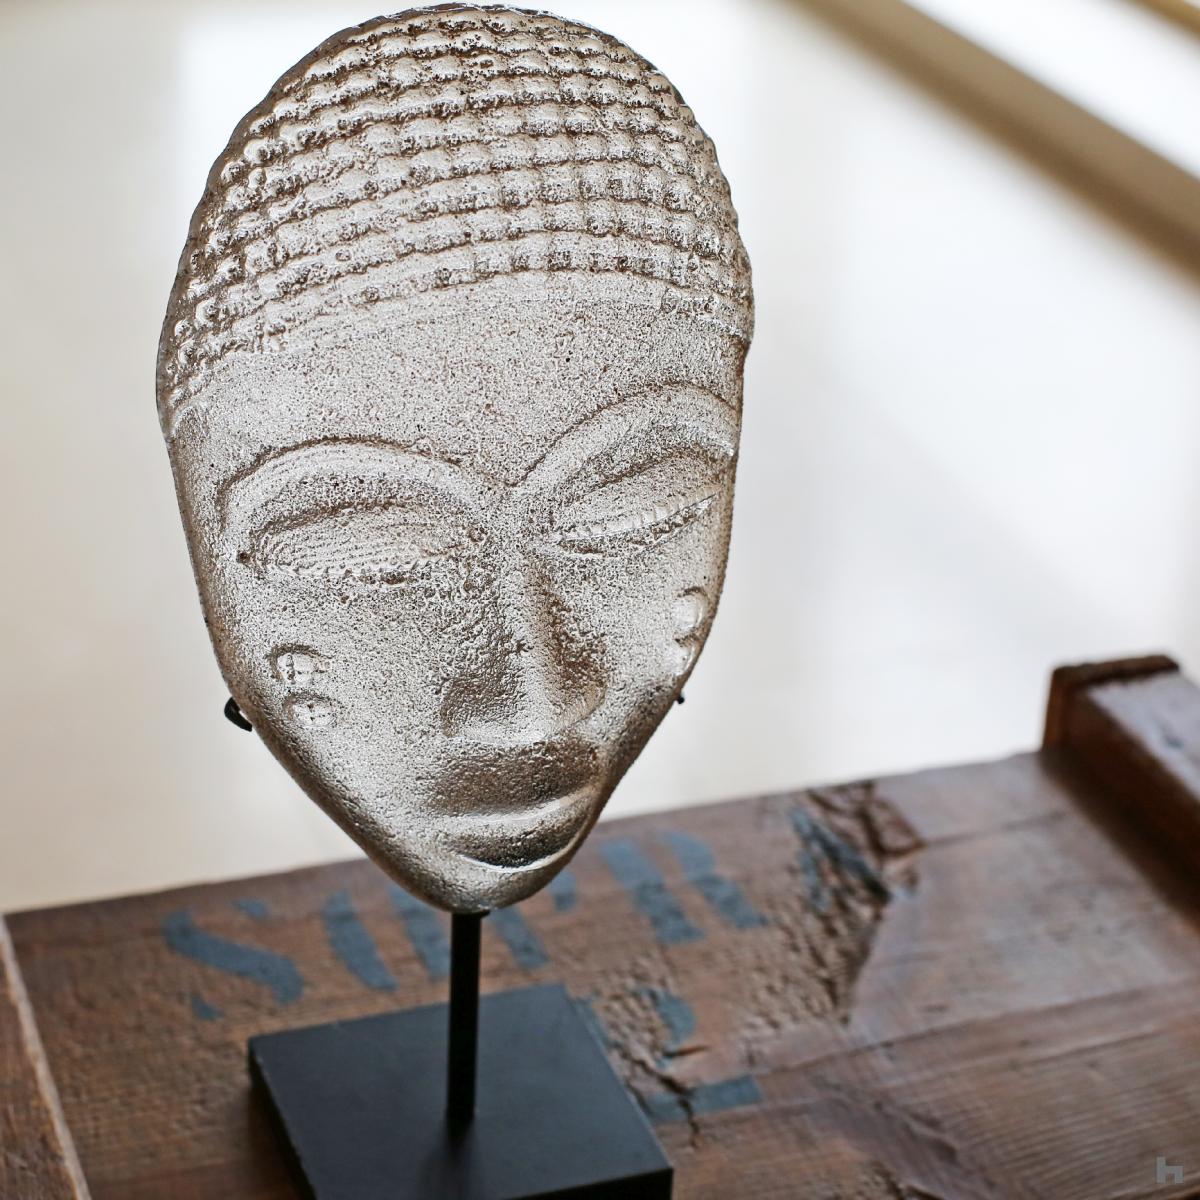 ROOTS, Bini Edo mask (Benin)